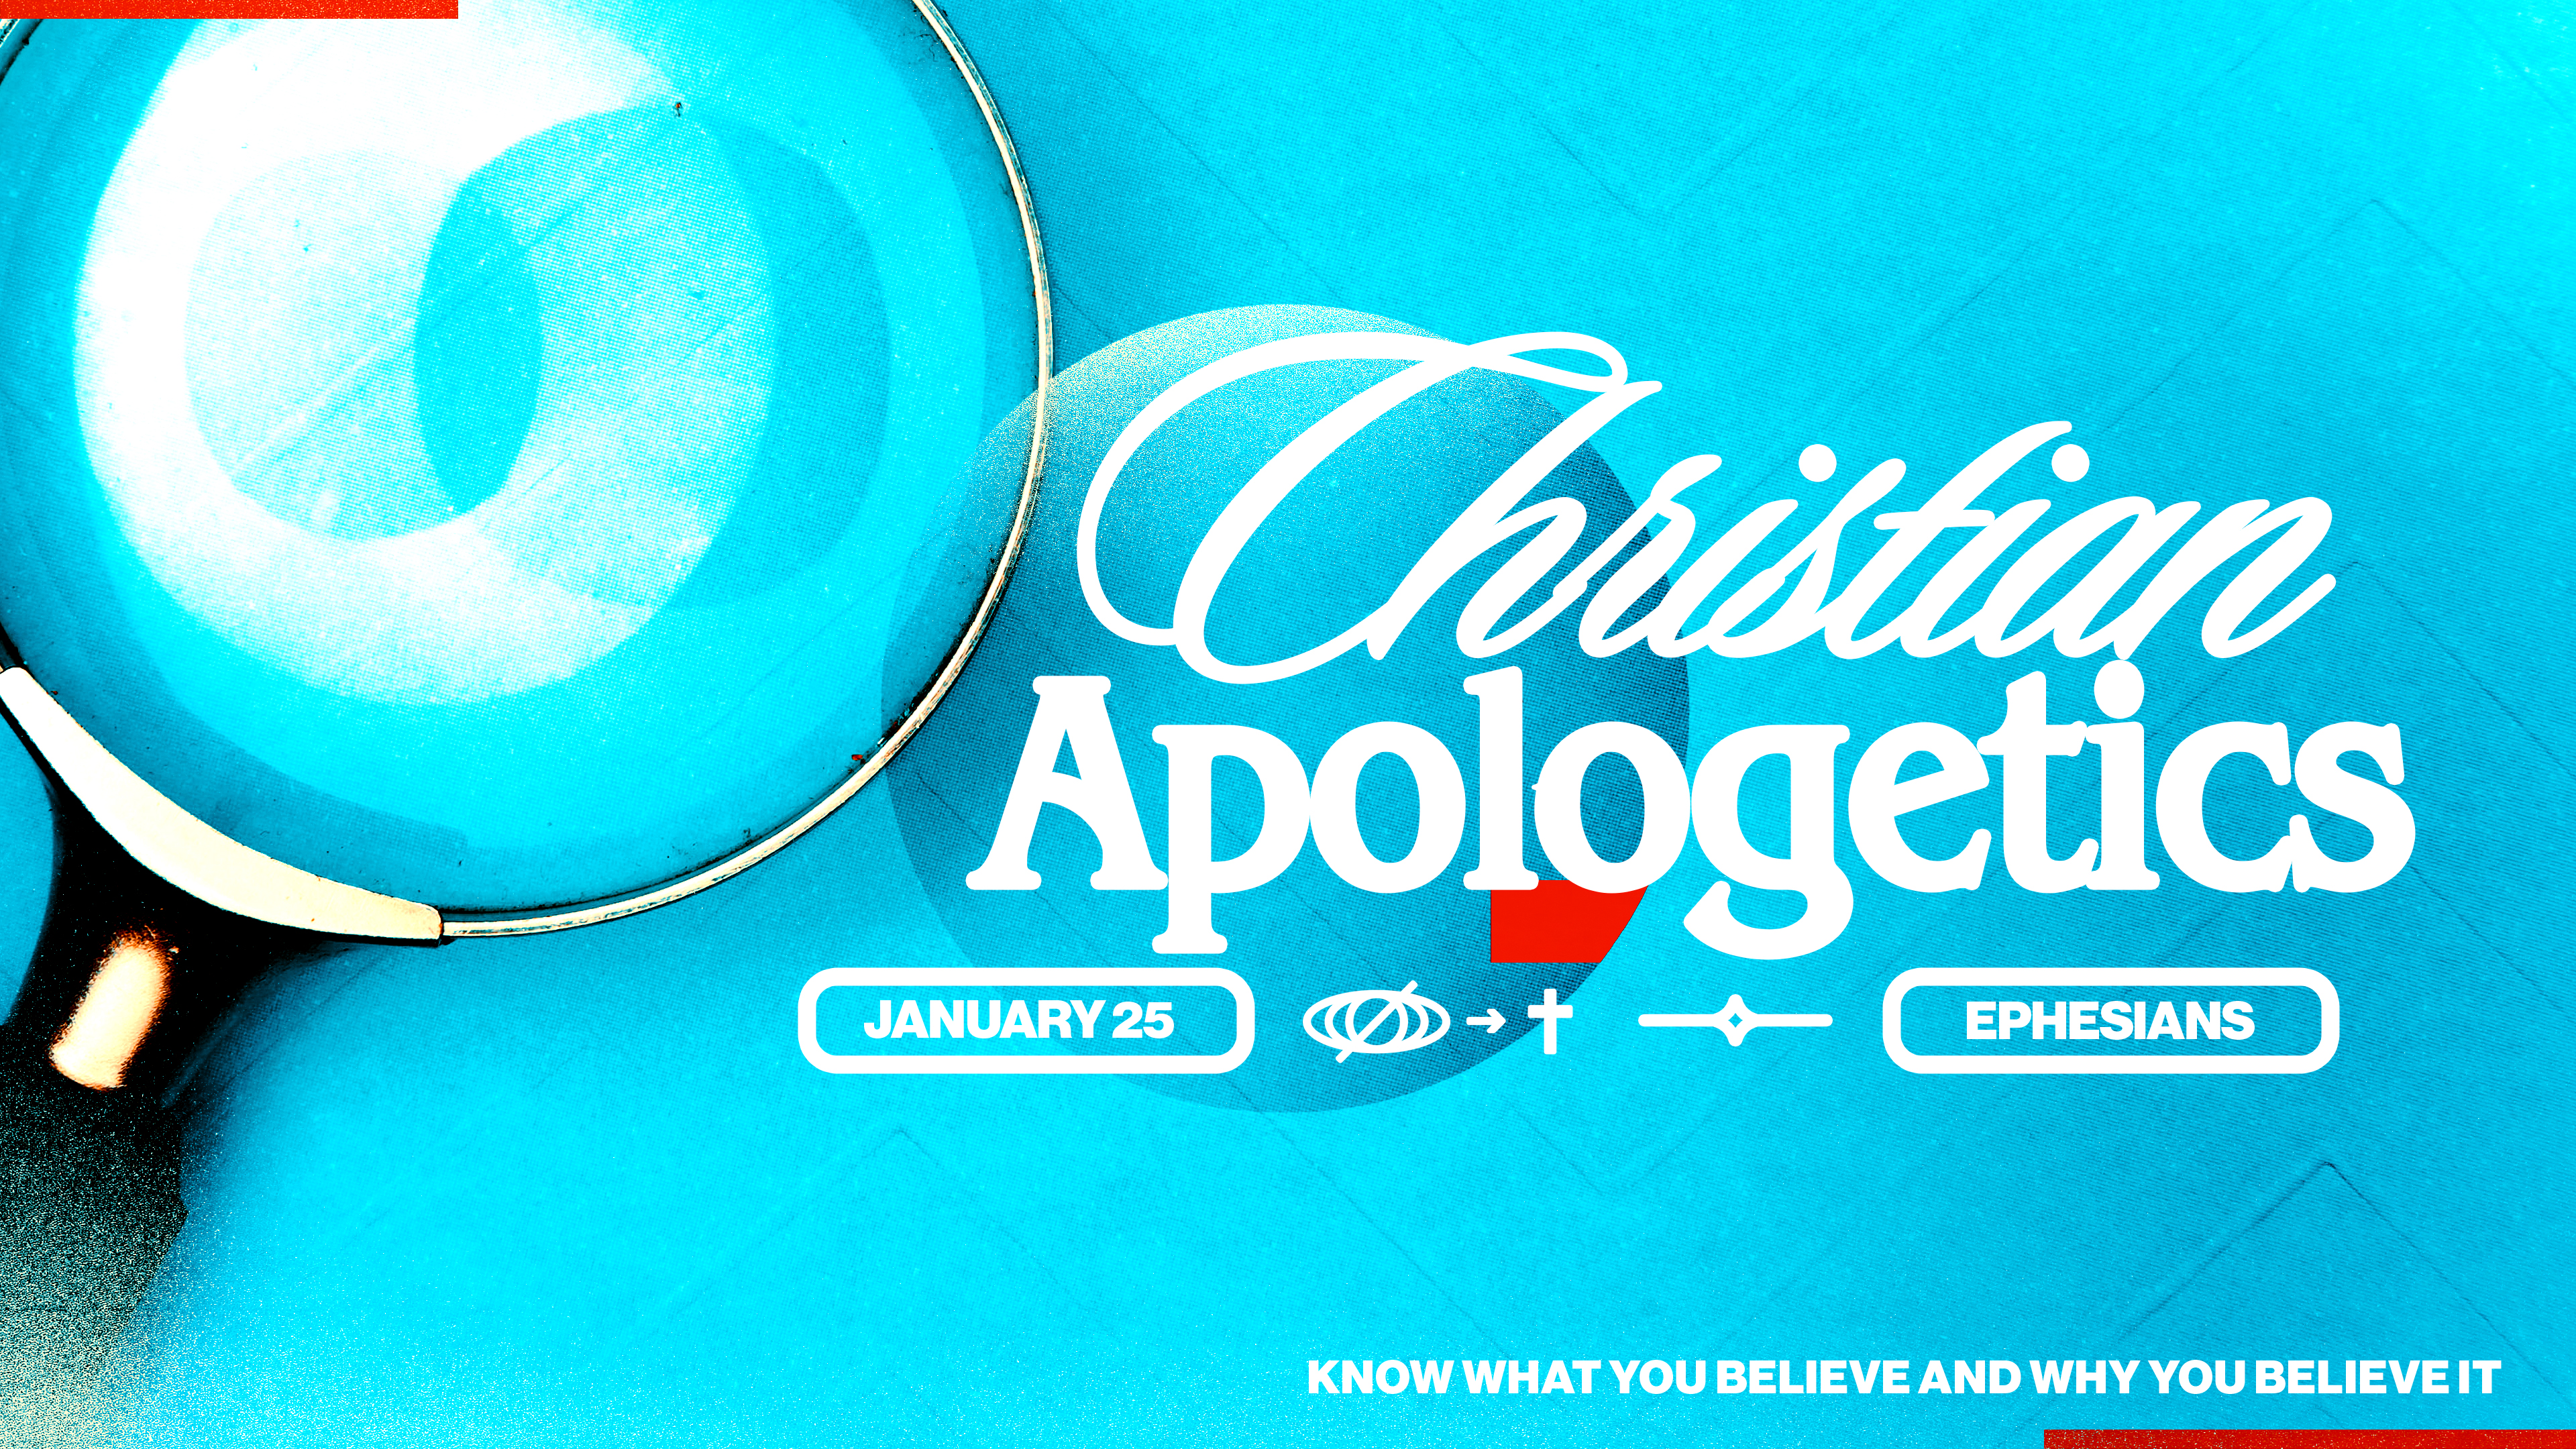 Christian Apologetics: Let me Explain!